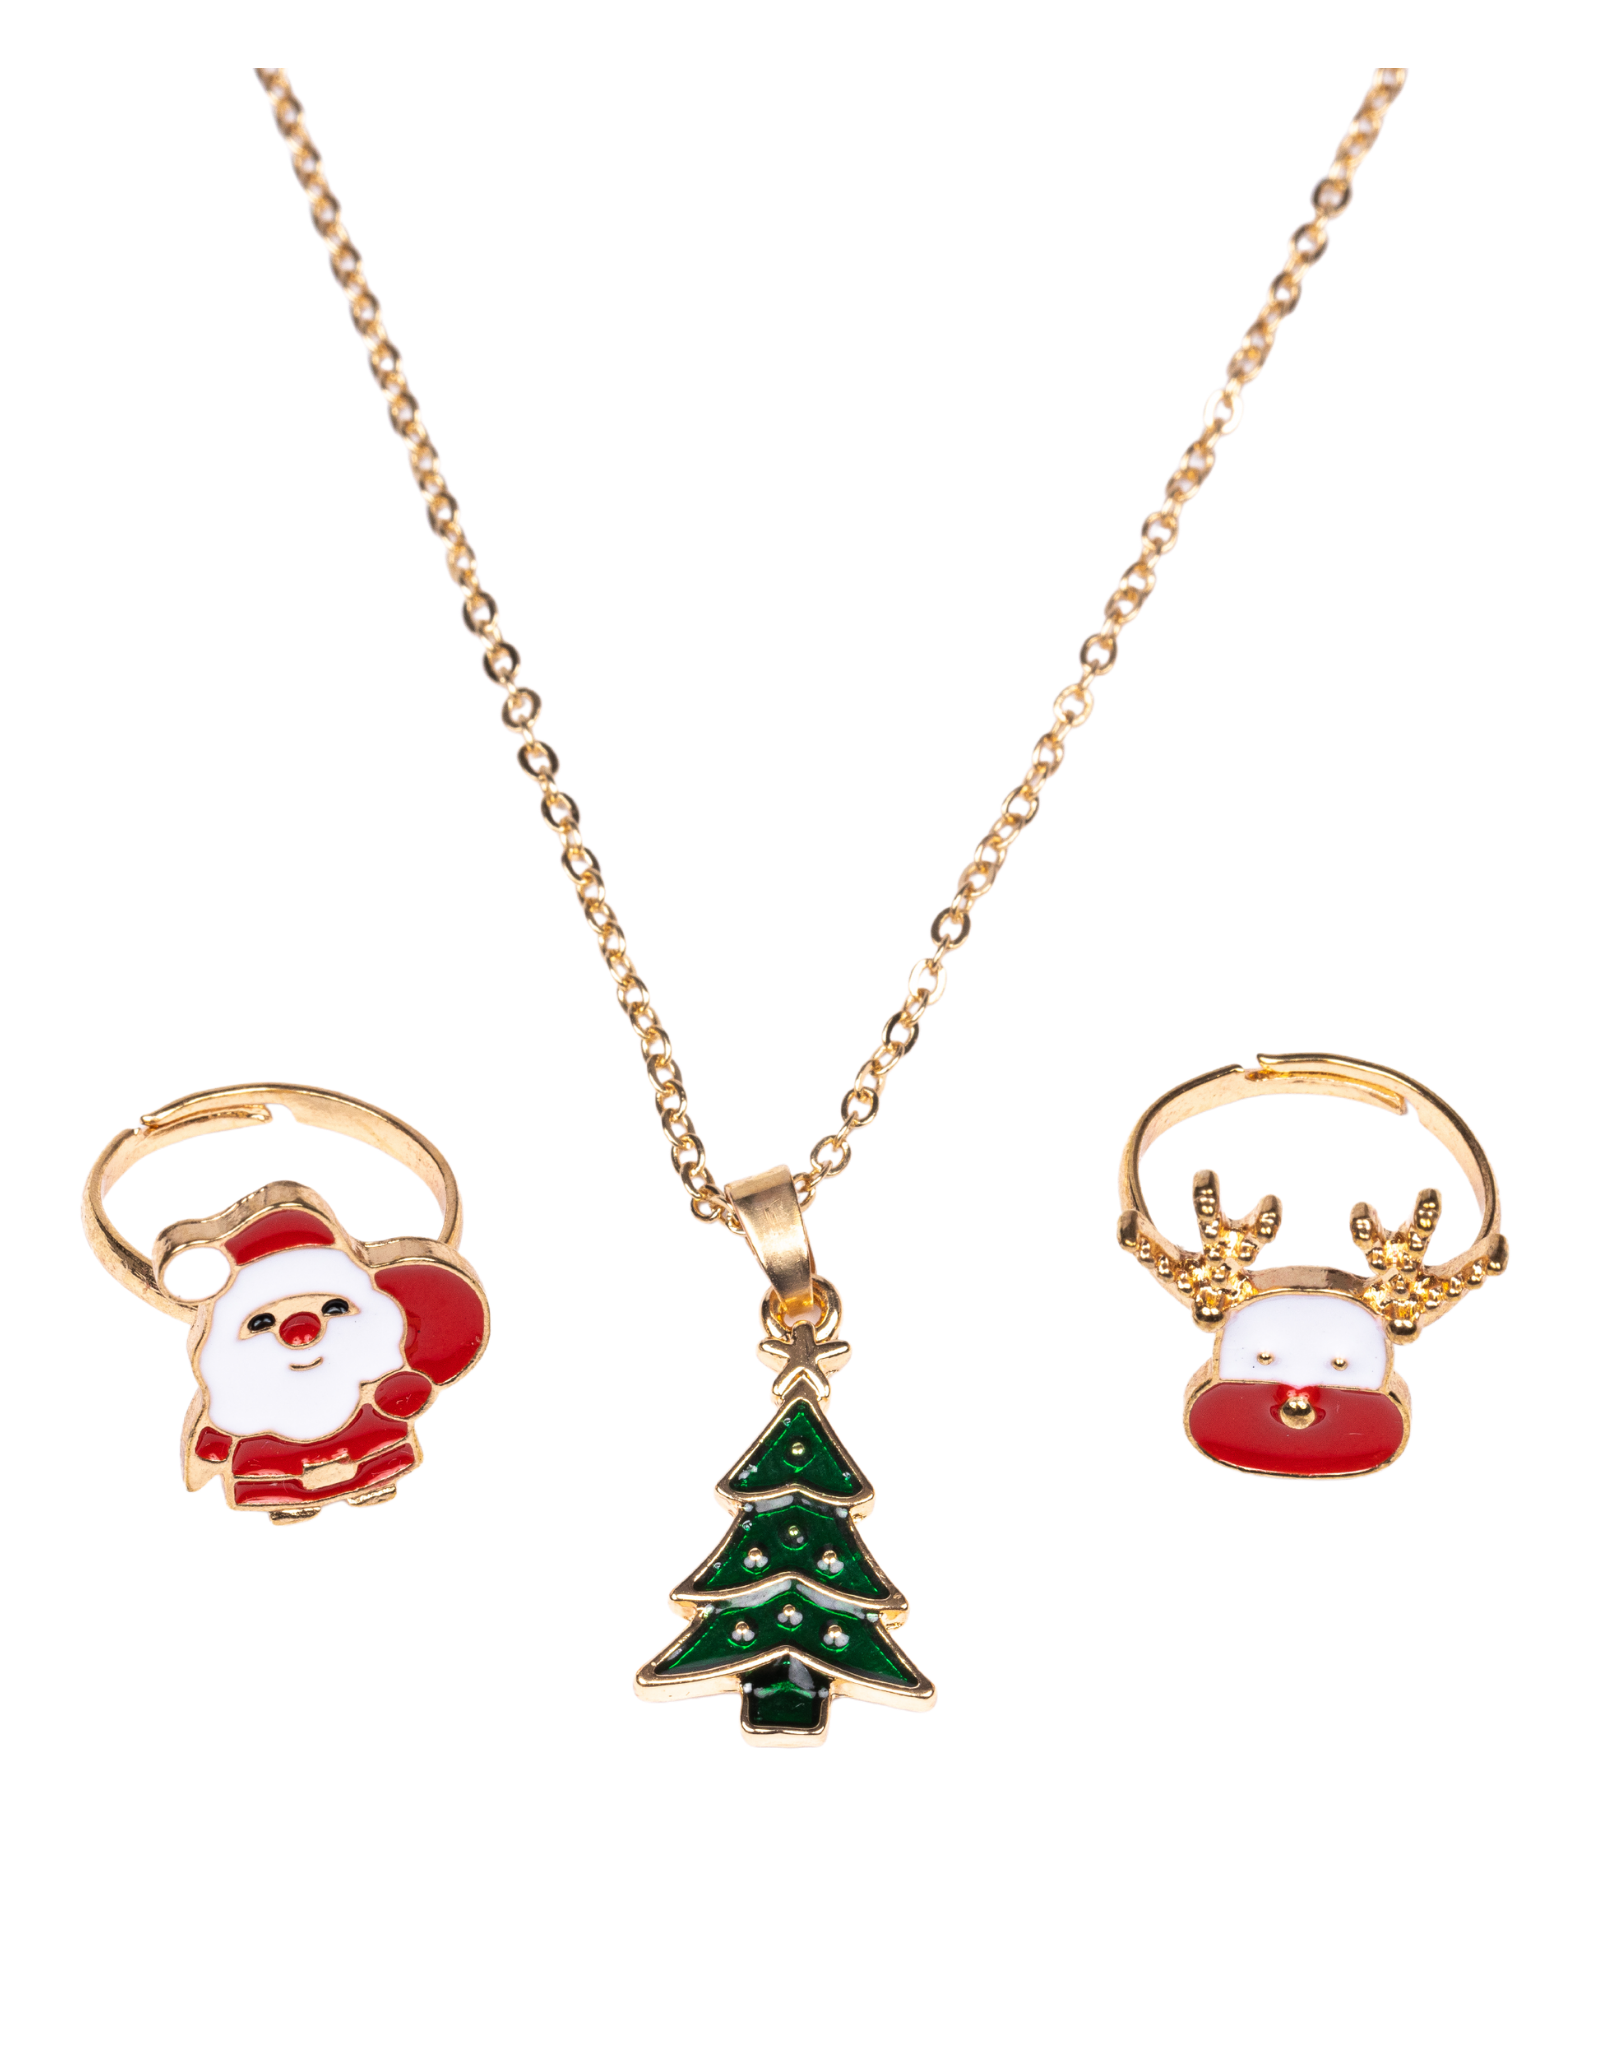 GreatPretenders 86138 Christmas Tree Necklace/Ring Set